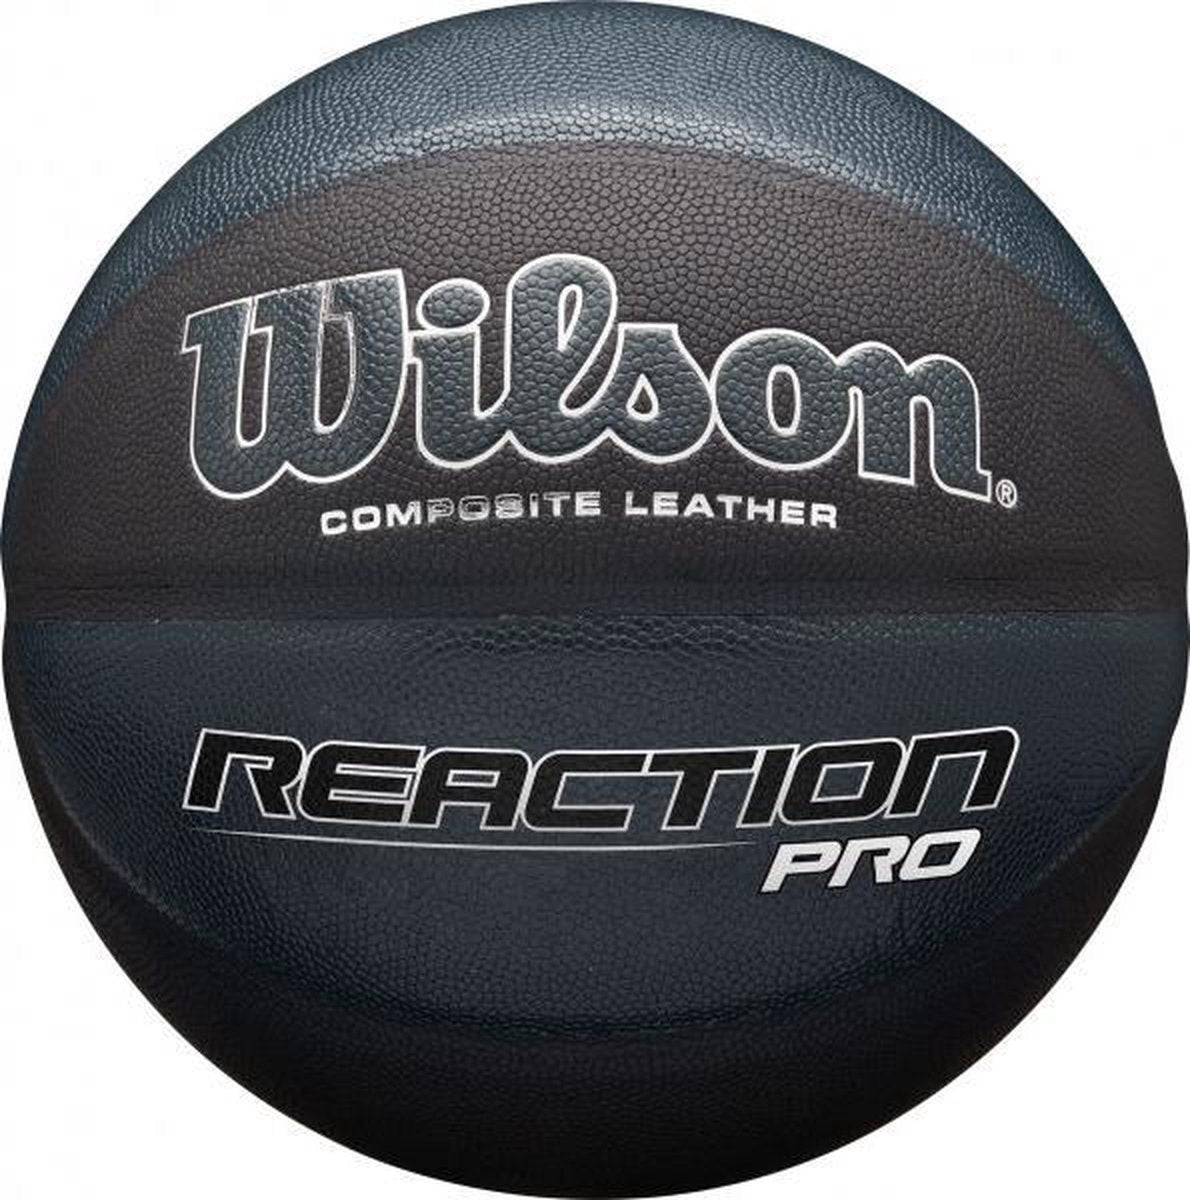 Basket-ball - Reaction Pro Shadow